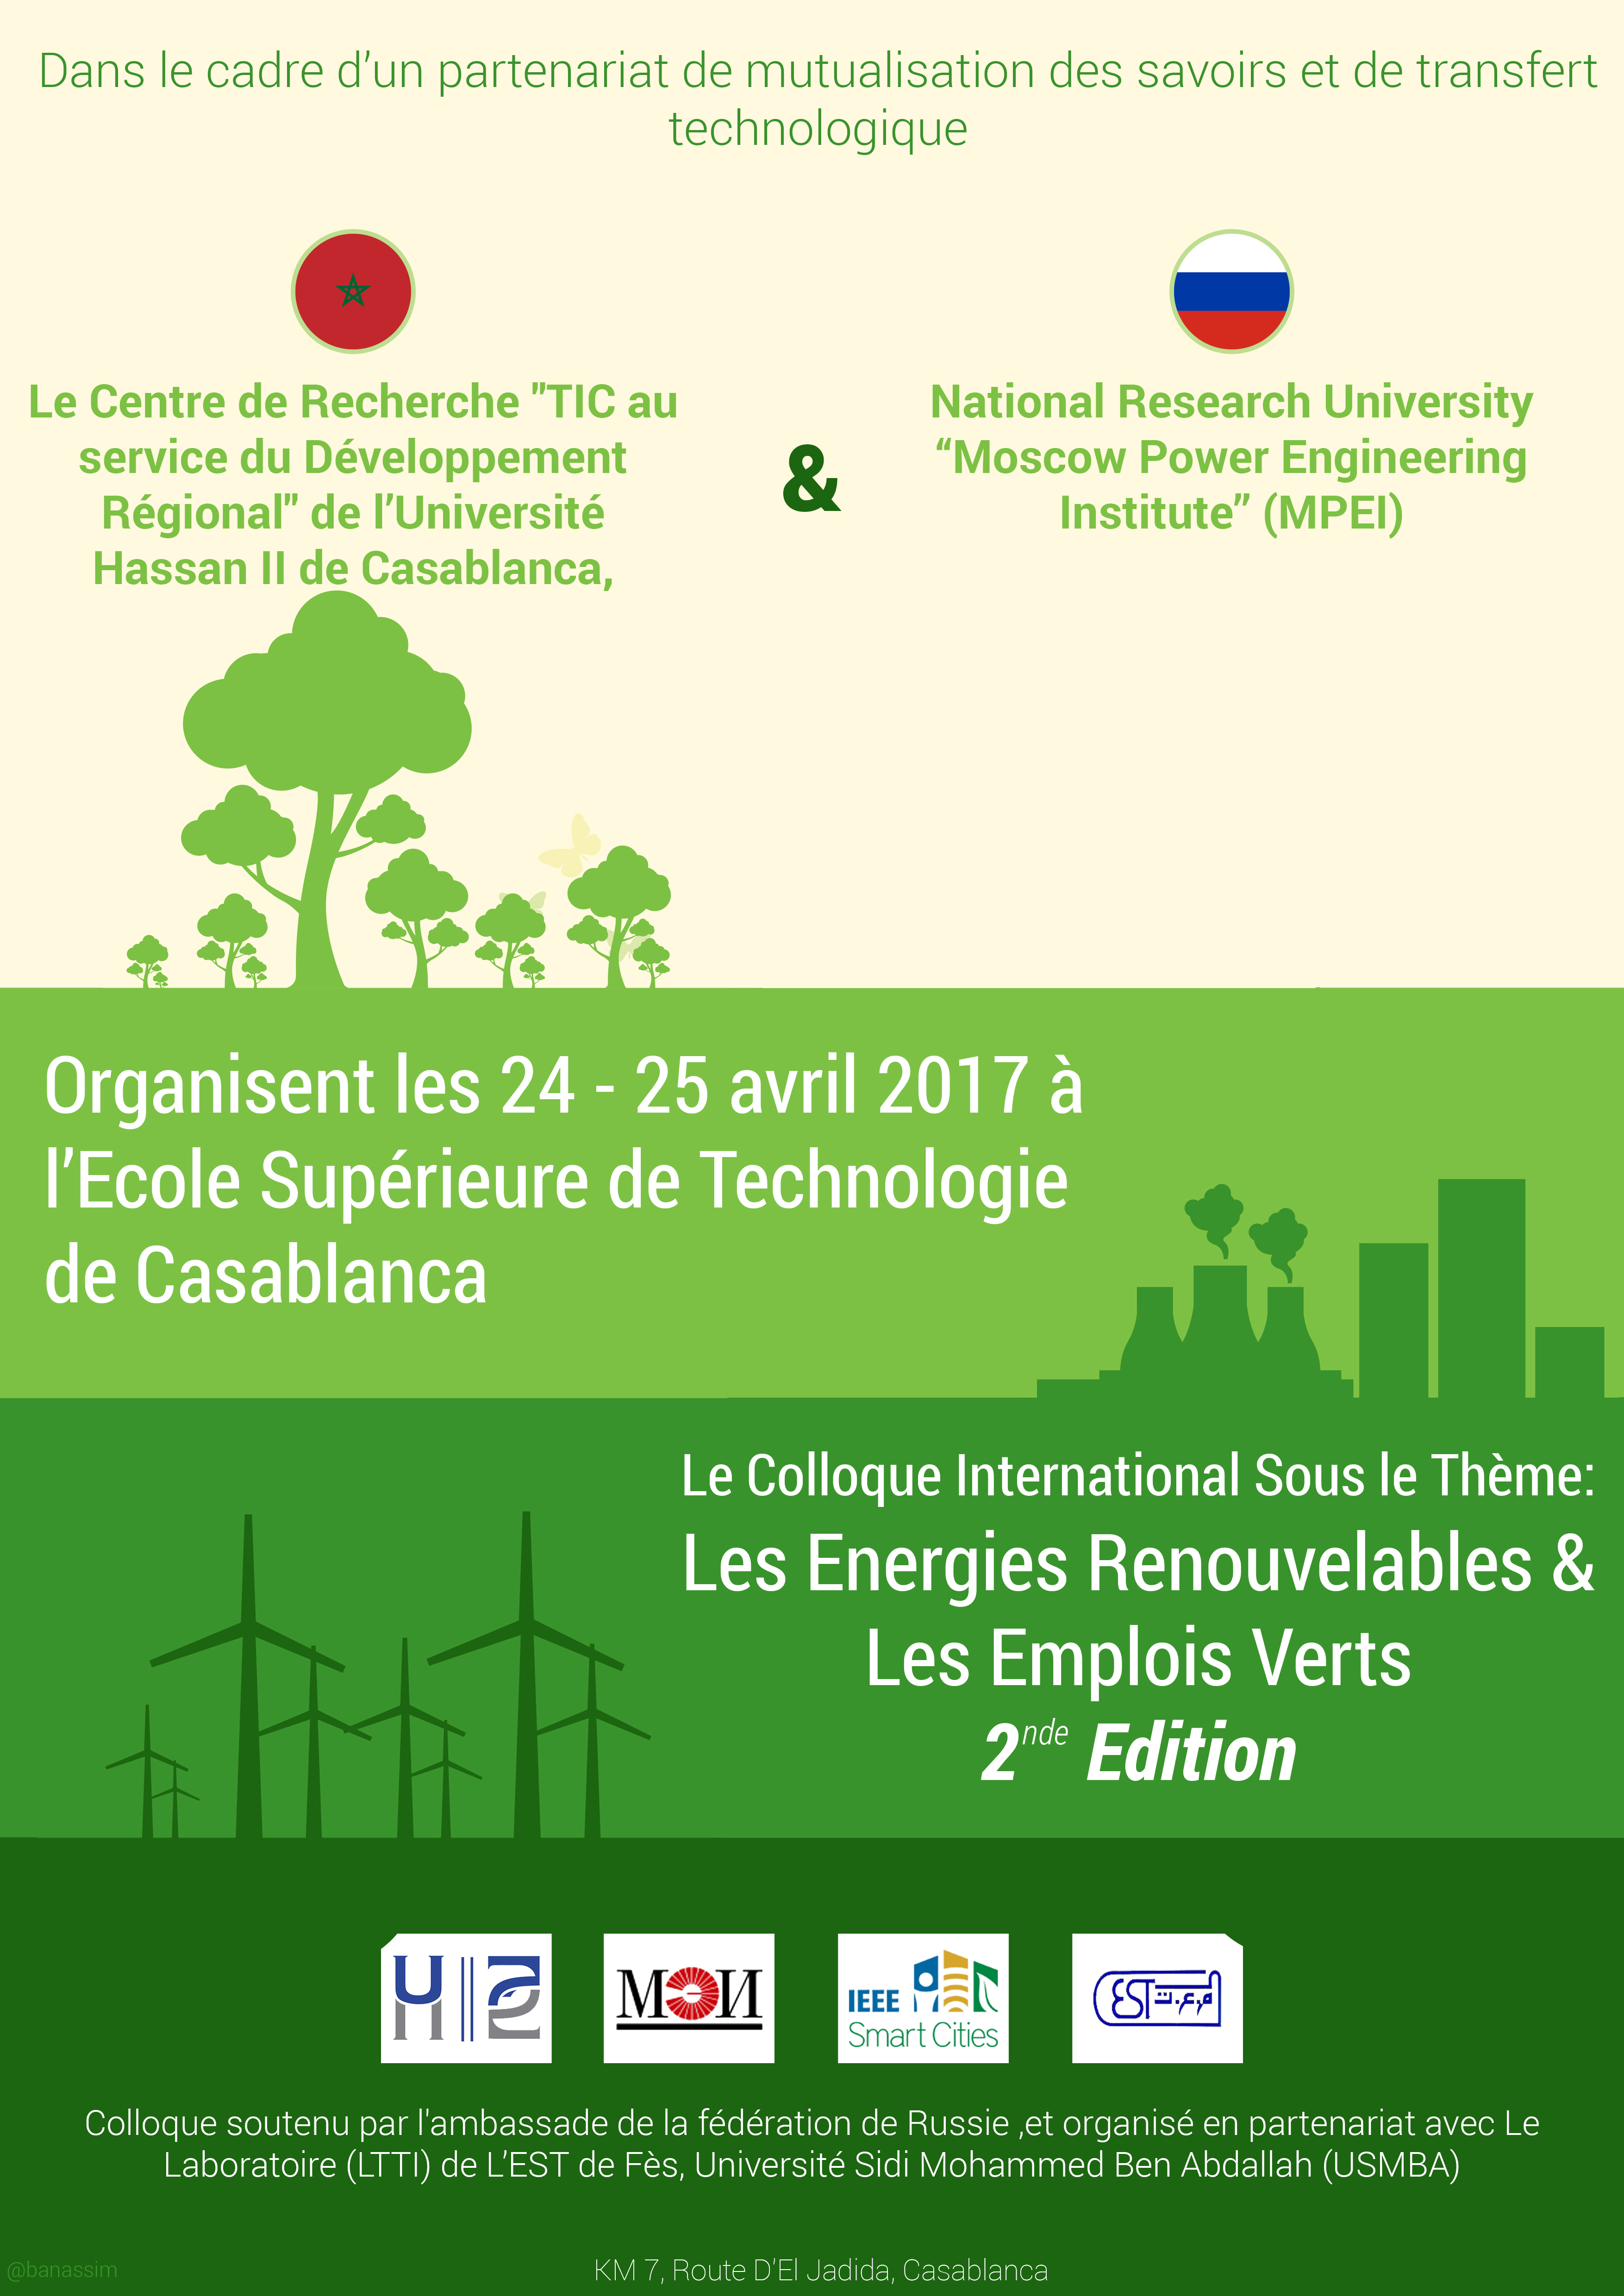 Les Energies Renjvelables-Les Emplois Verts.jpg